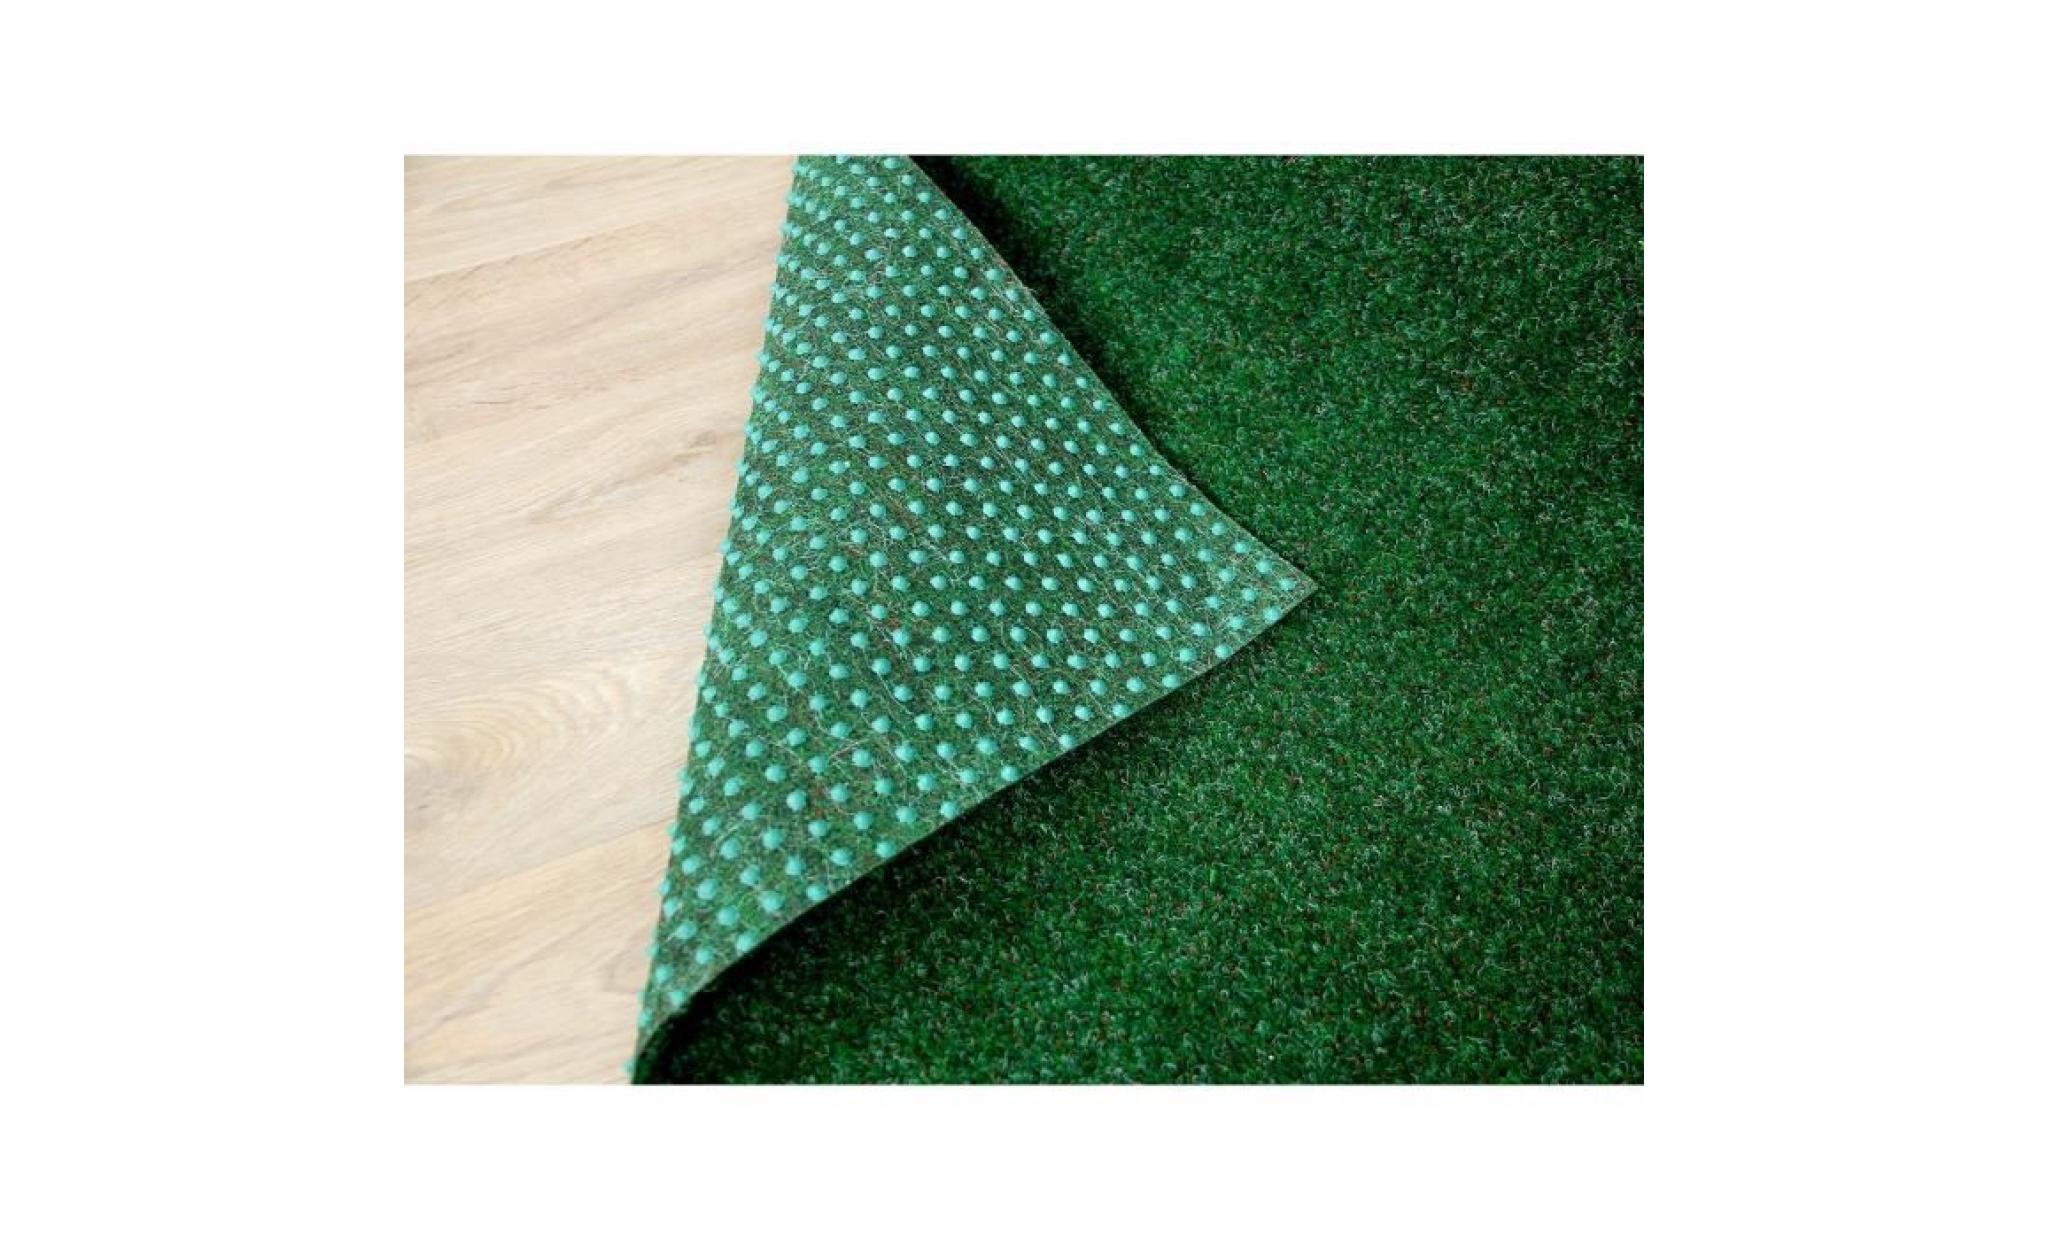 kingston   tapis type gazon artificiel – pour jardin, terrasse, balcon   anthracite [200x200 cm] pas cher